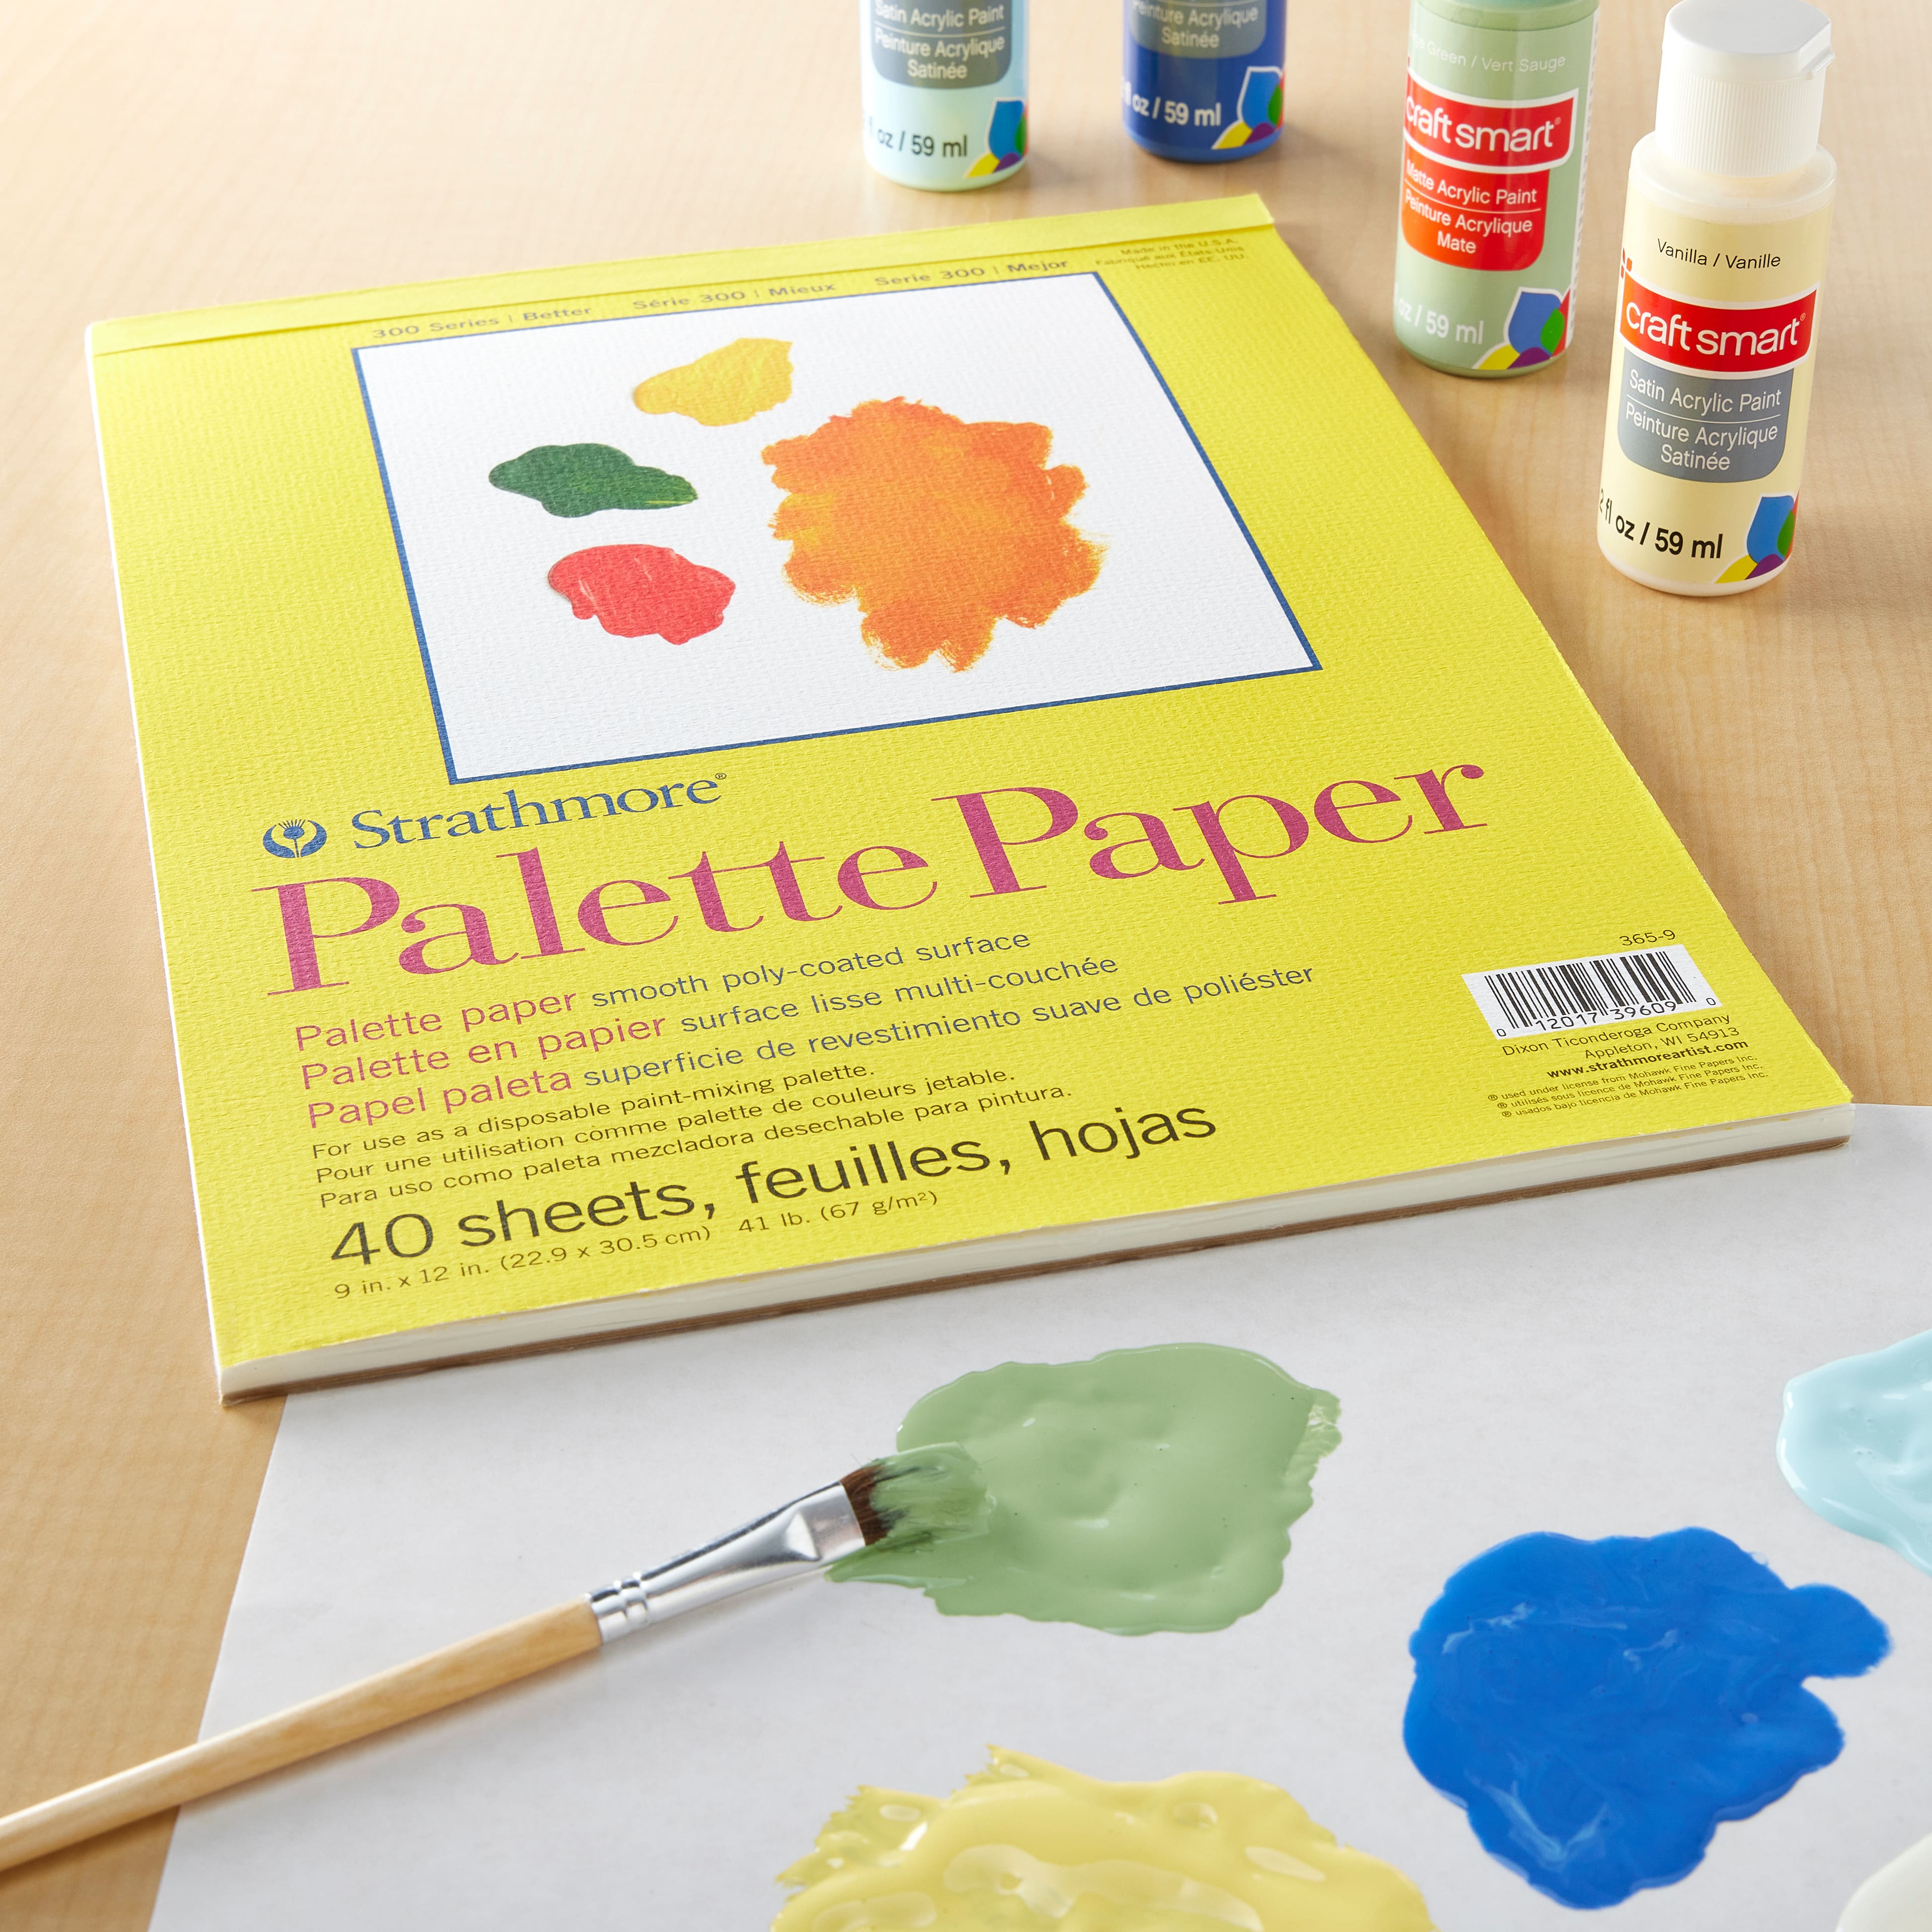 Strathmore Palette Paper Pad 12X16-41lb 40 Sheets